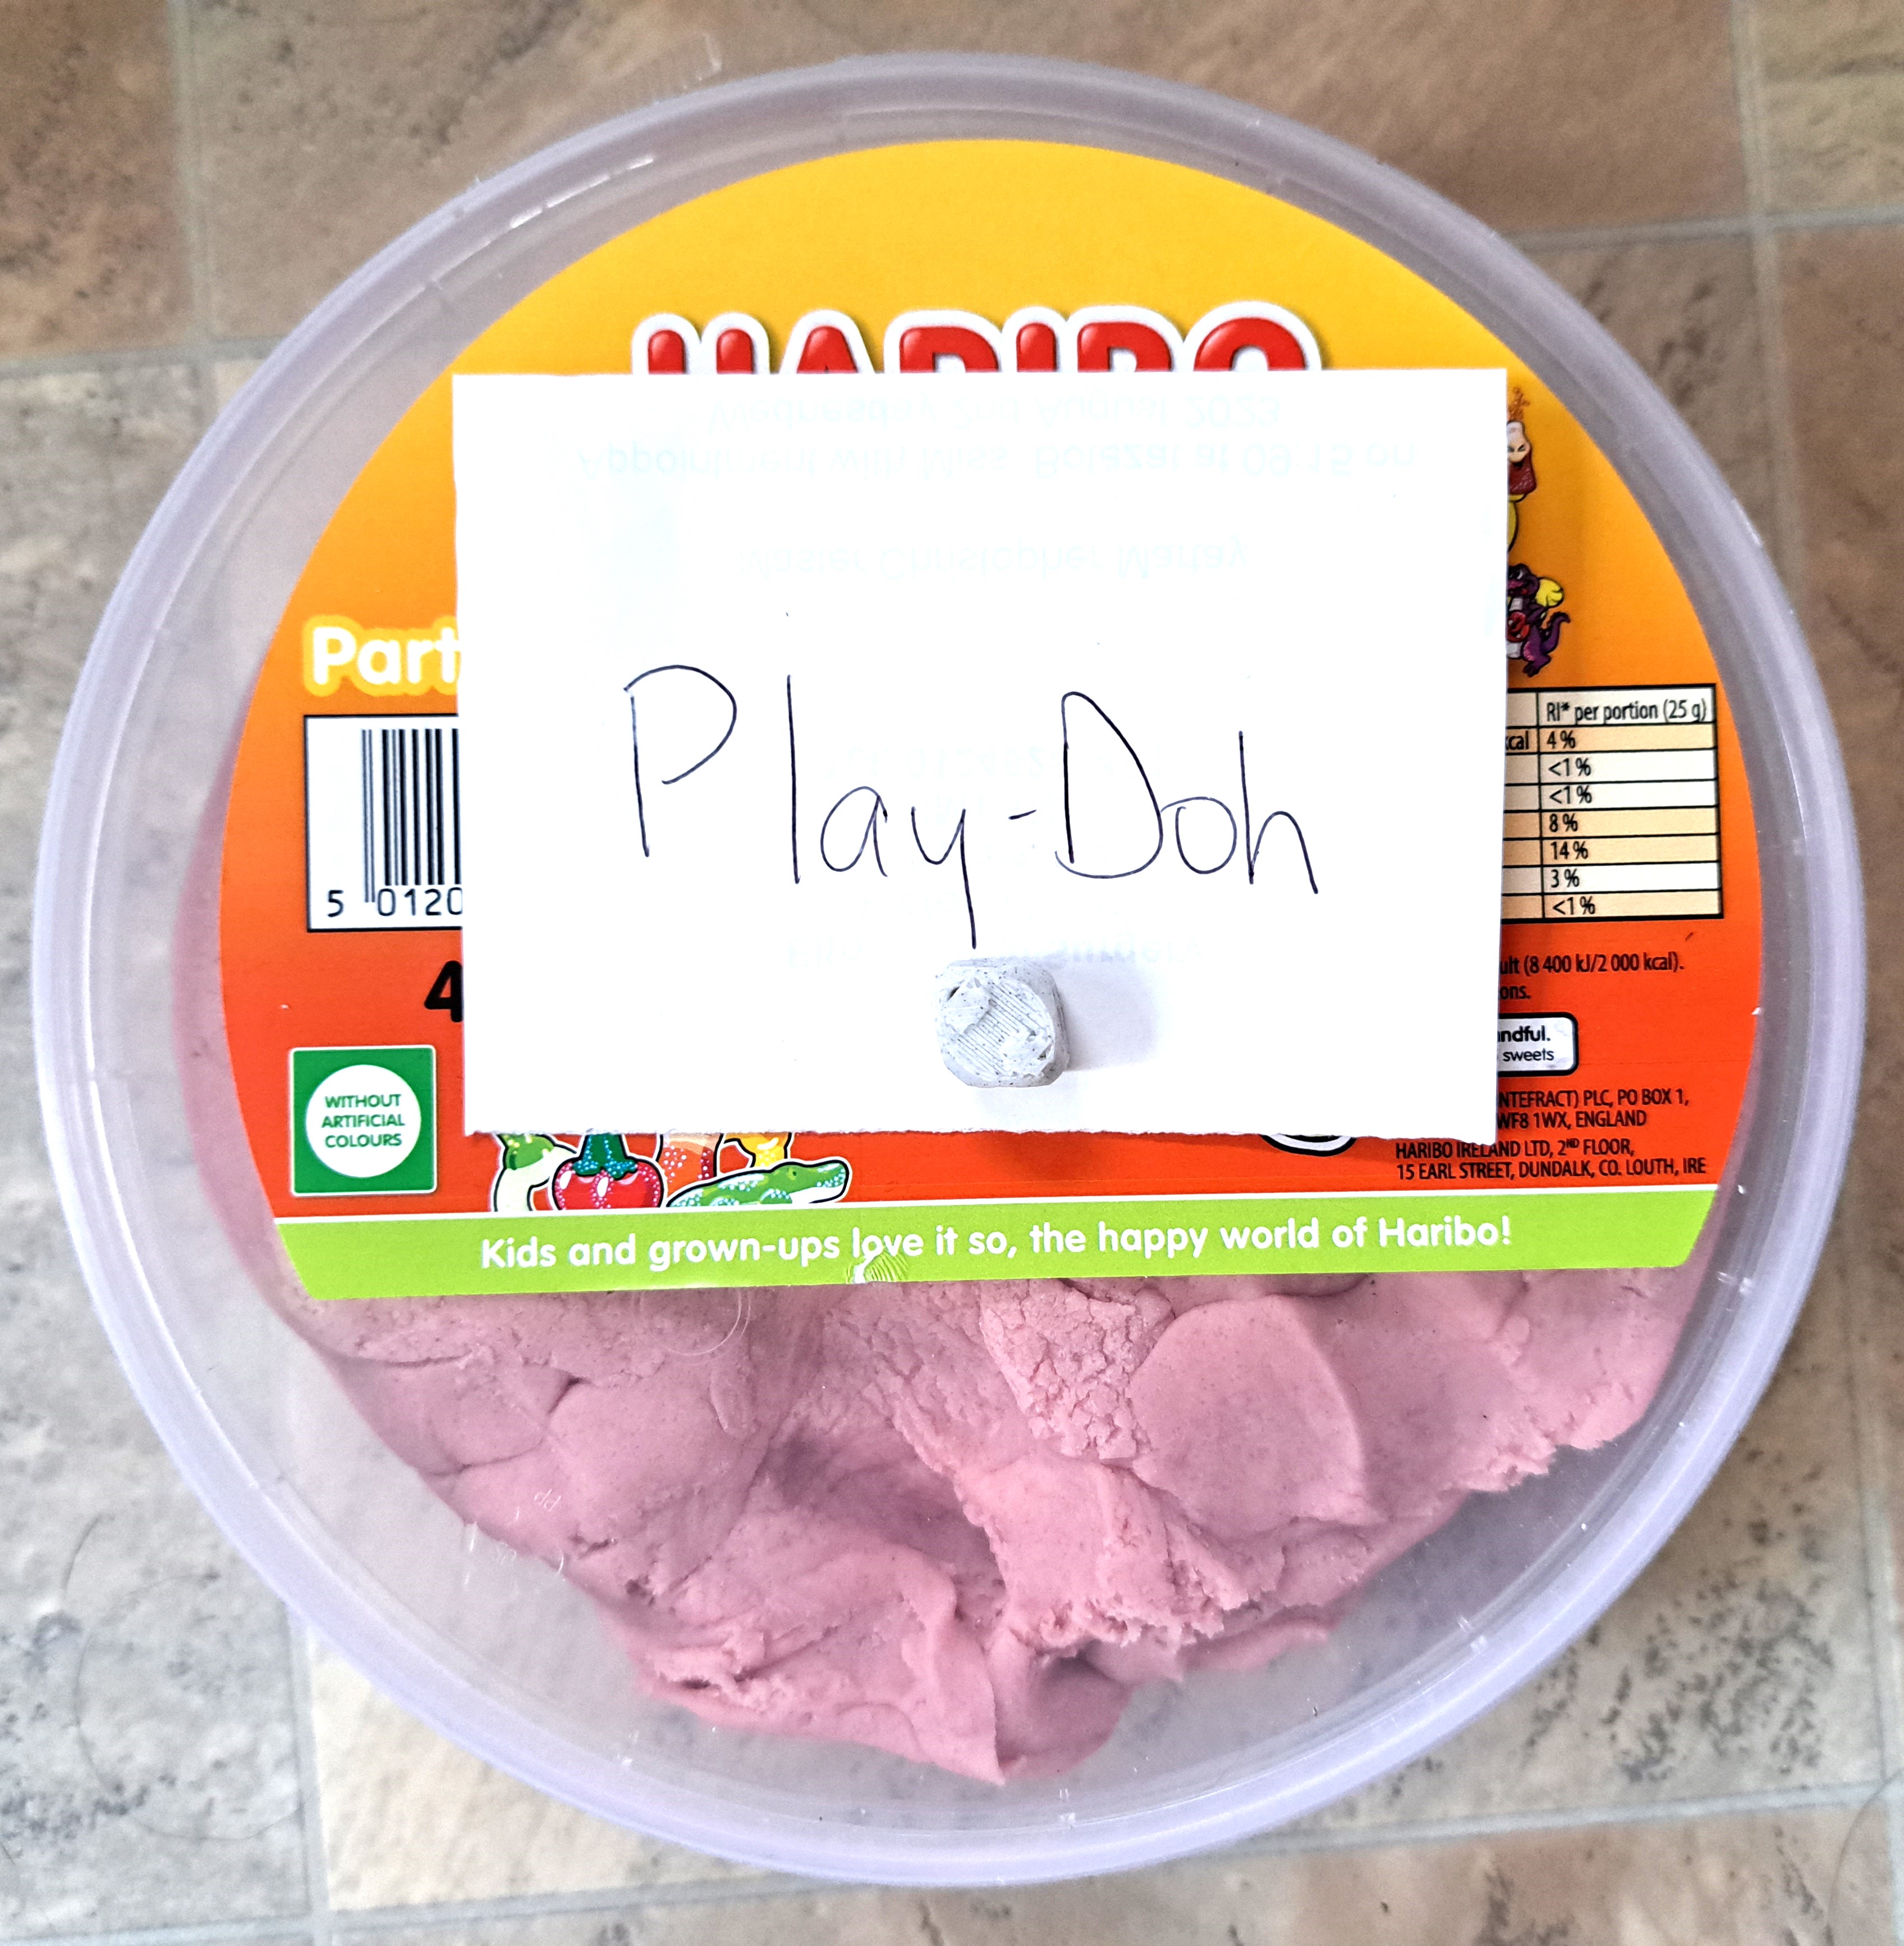 Haribo Packet of Play-Doh